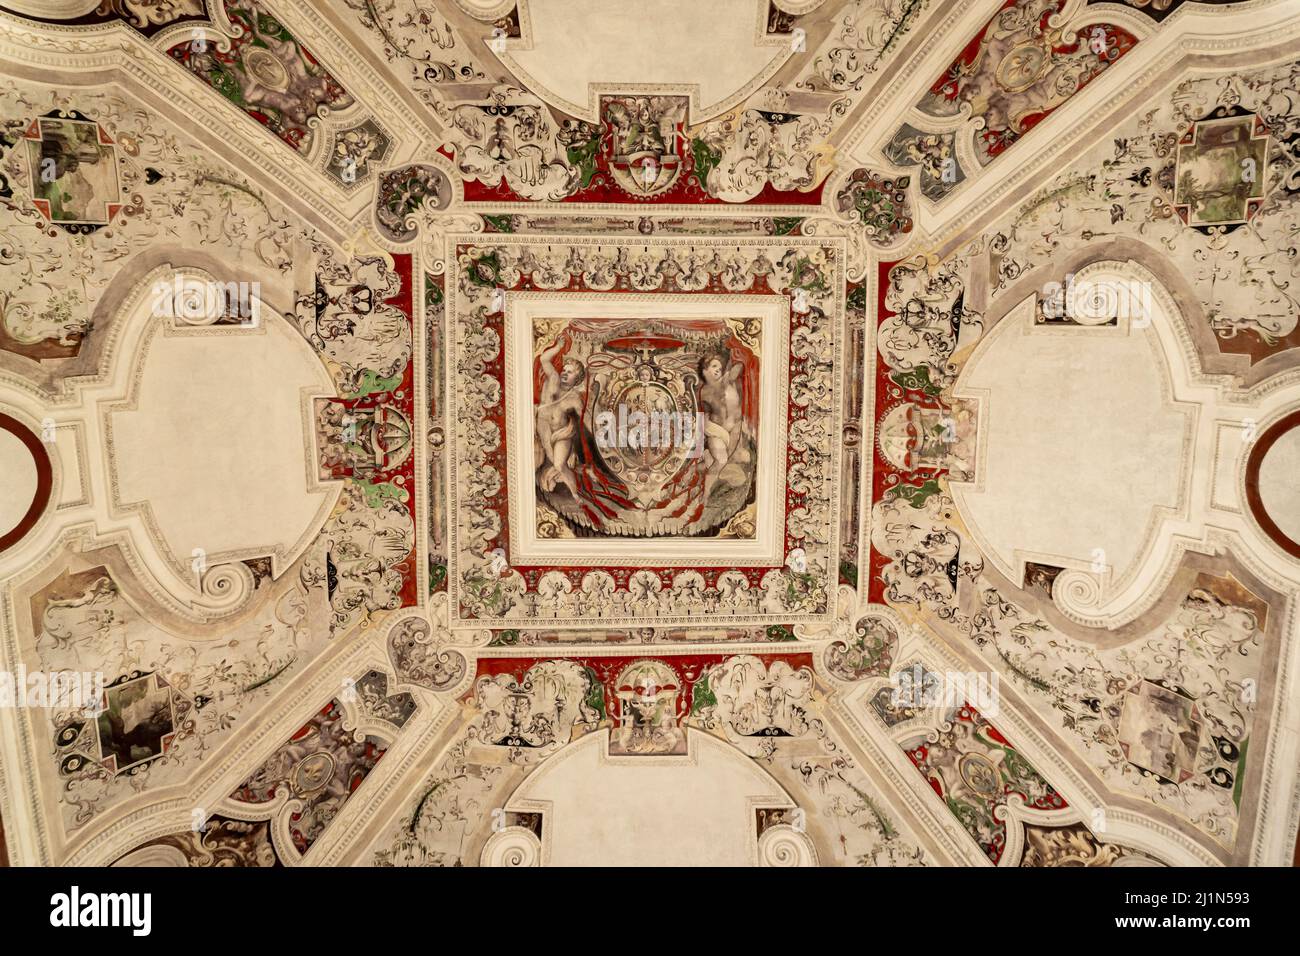 TIVOLI, ITALY - SEPTEMBER 23, 2018: Villa d'Este interior at Tivoli, Italy. This 16th century villa in Tivoli is listed as a UNESCO world heritage sit Stock Photo